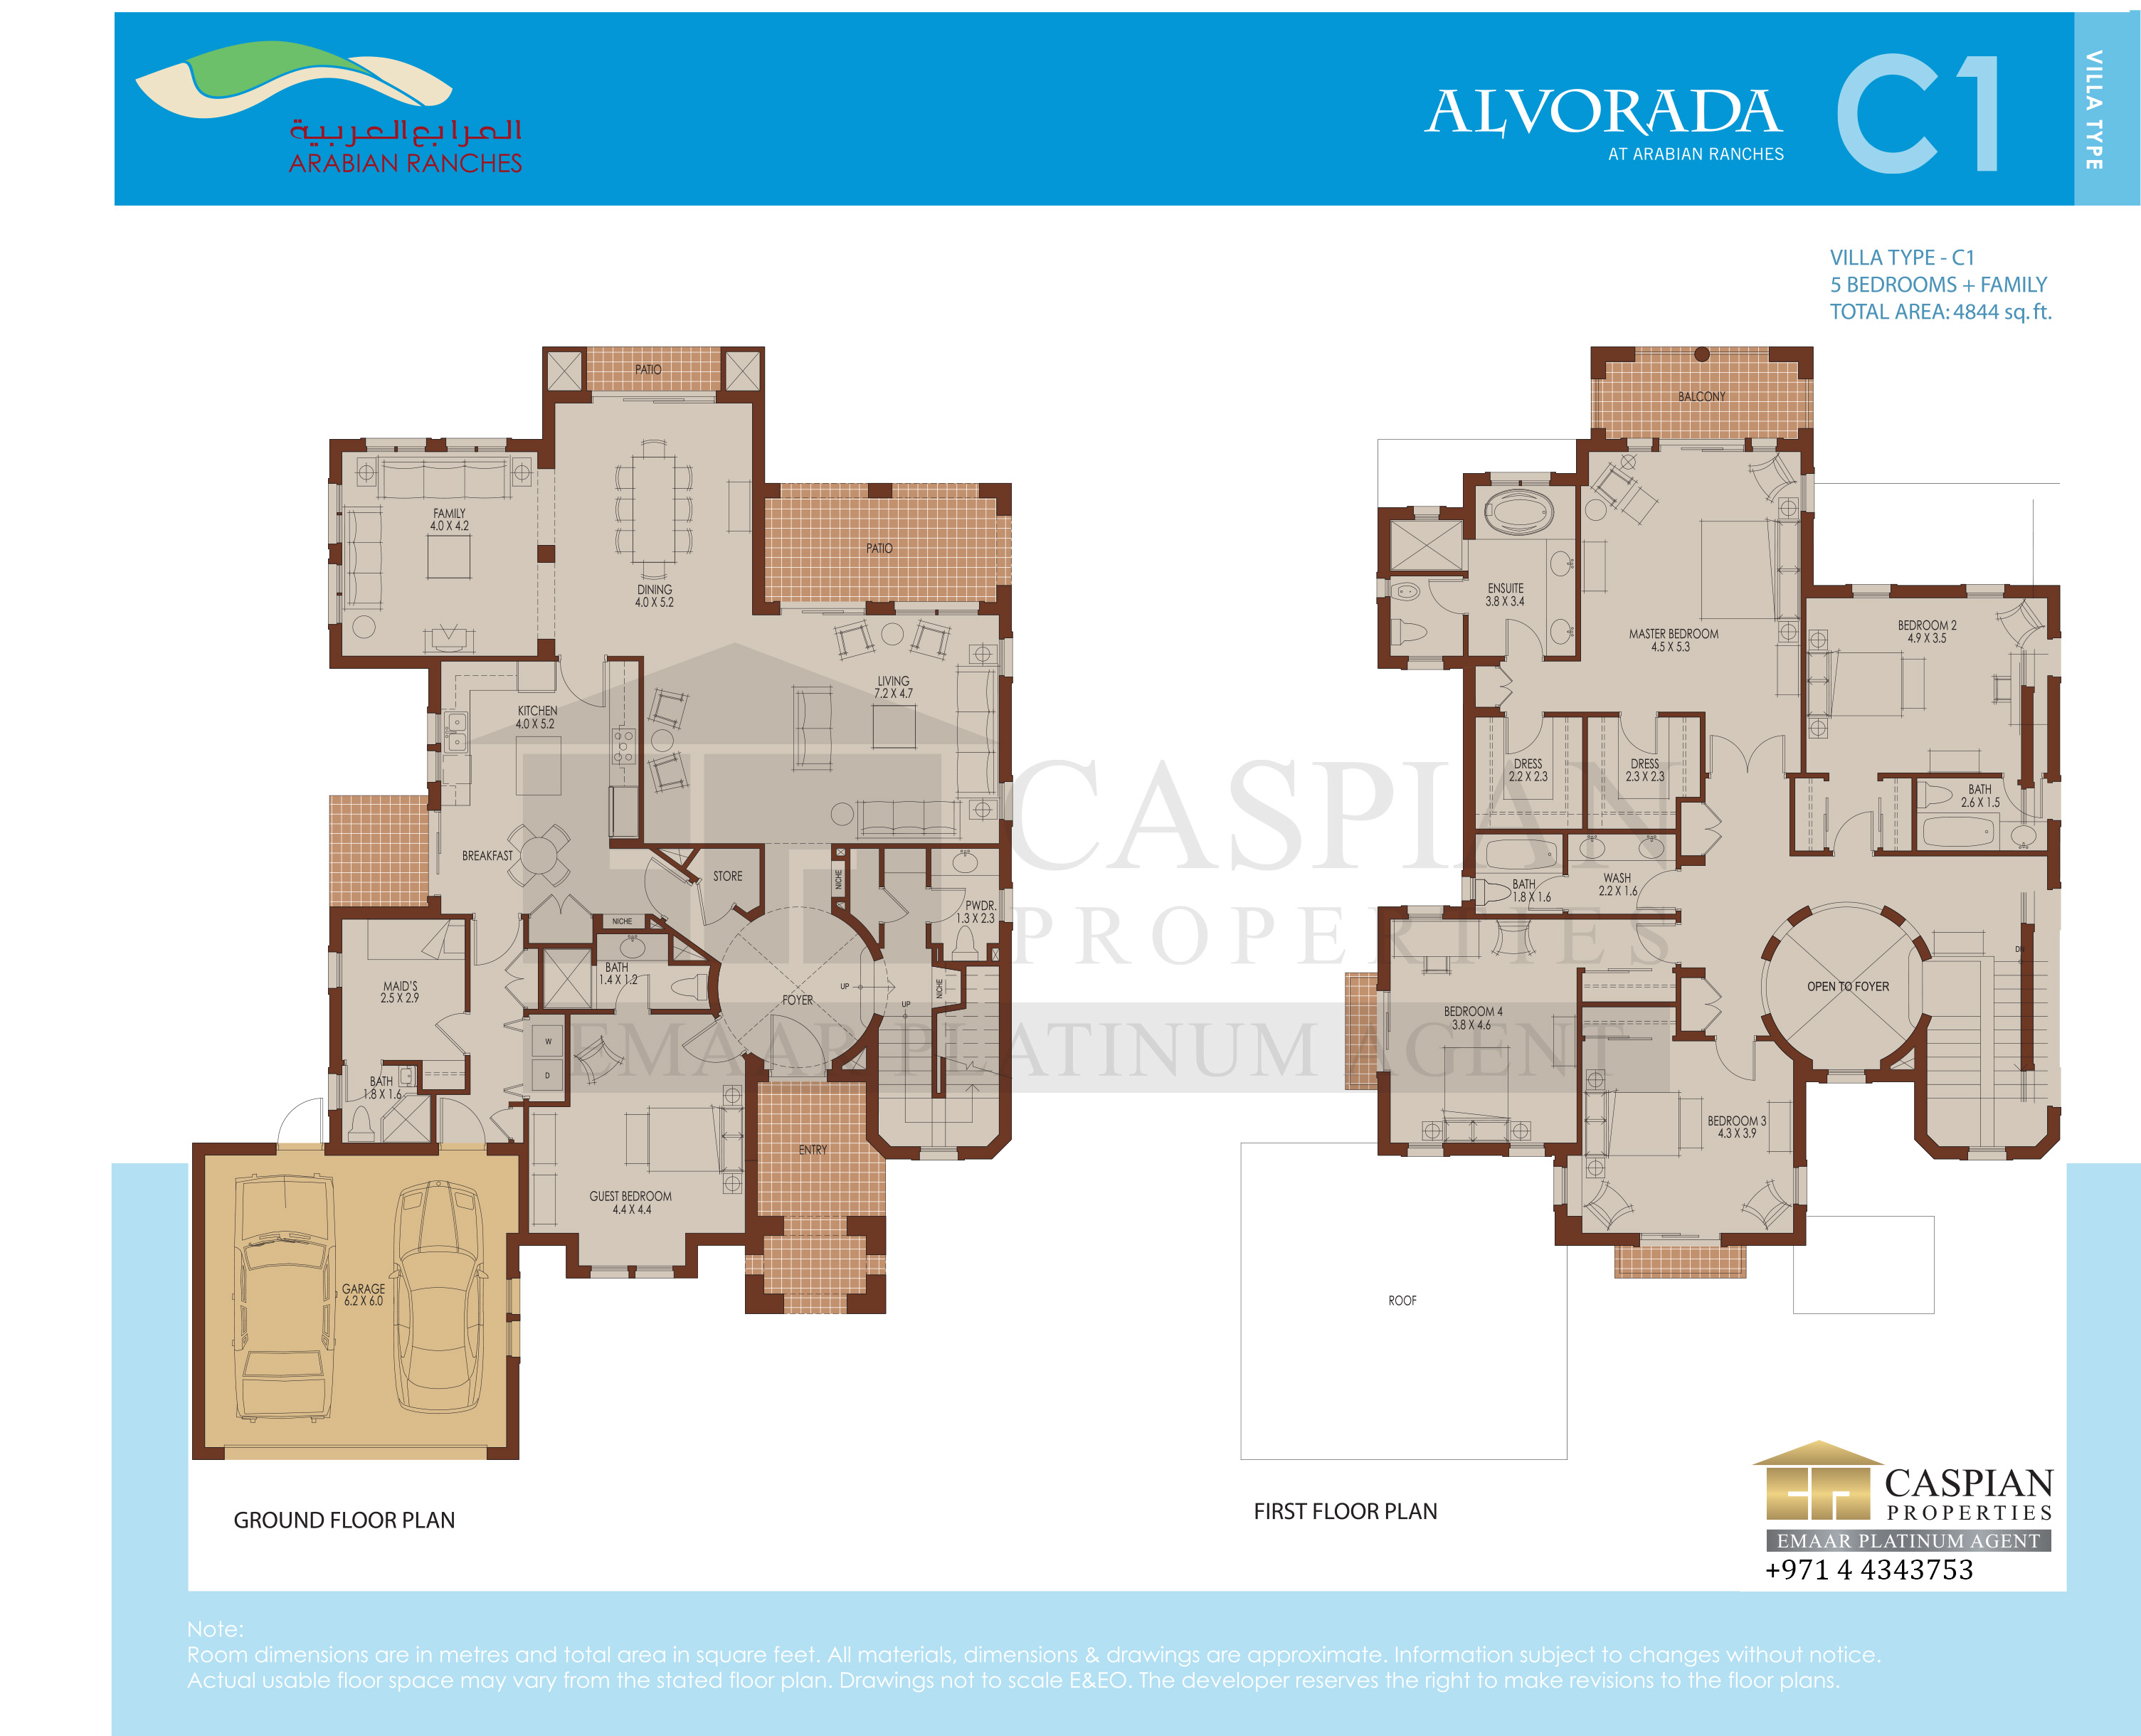 Arabian Ranches Alvorada Floor Plans